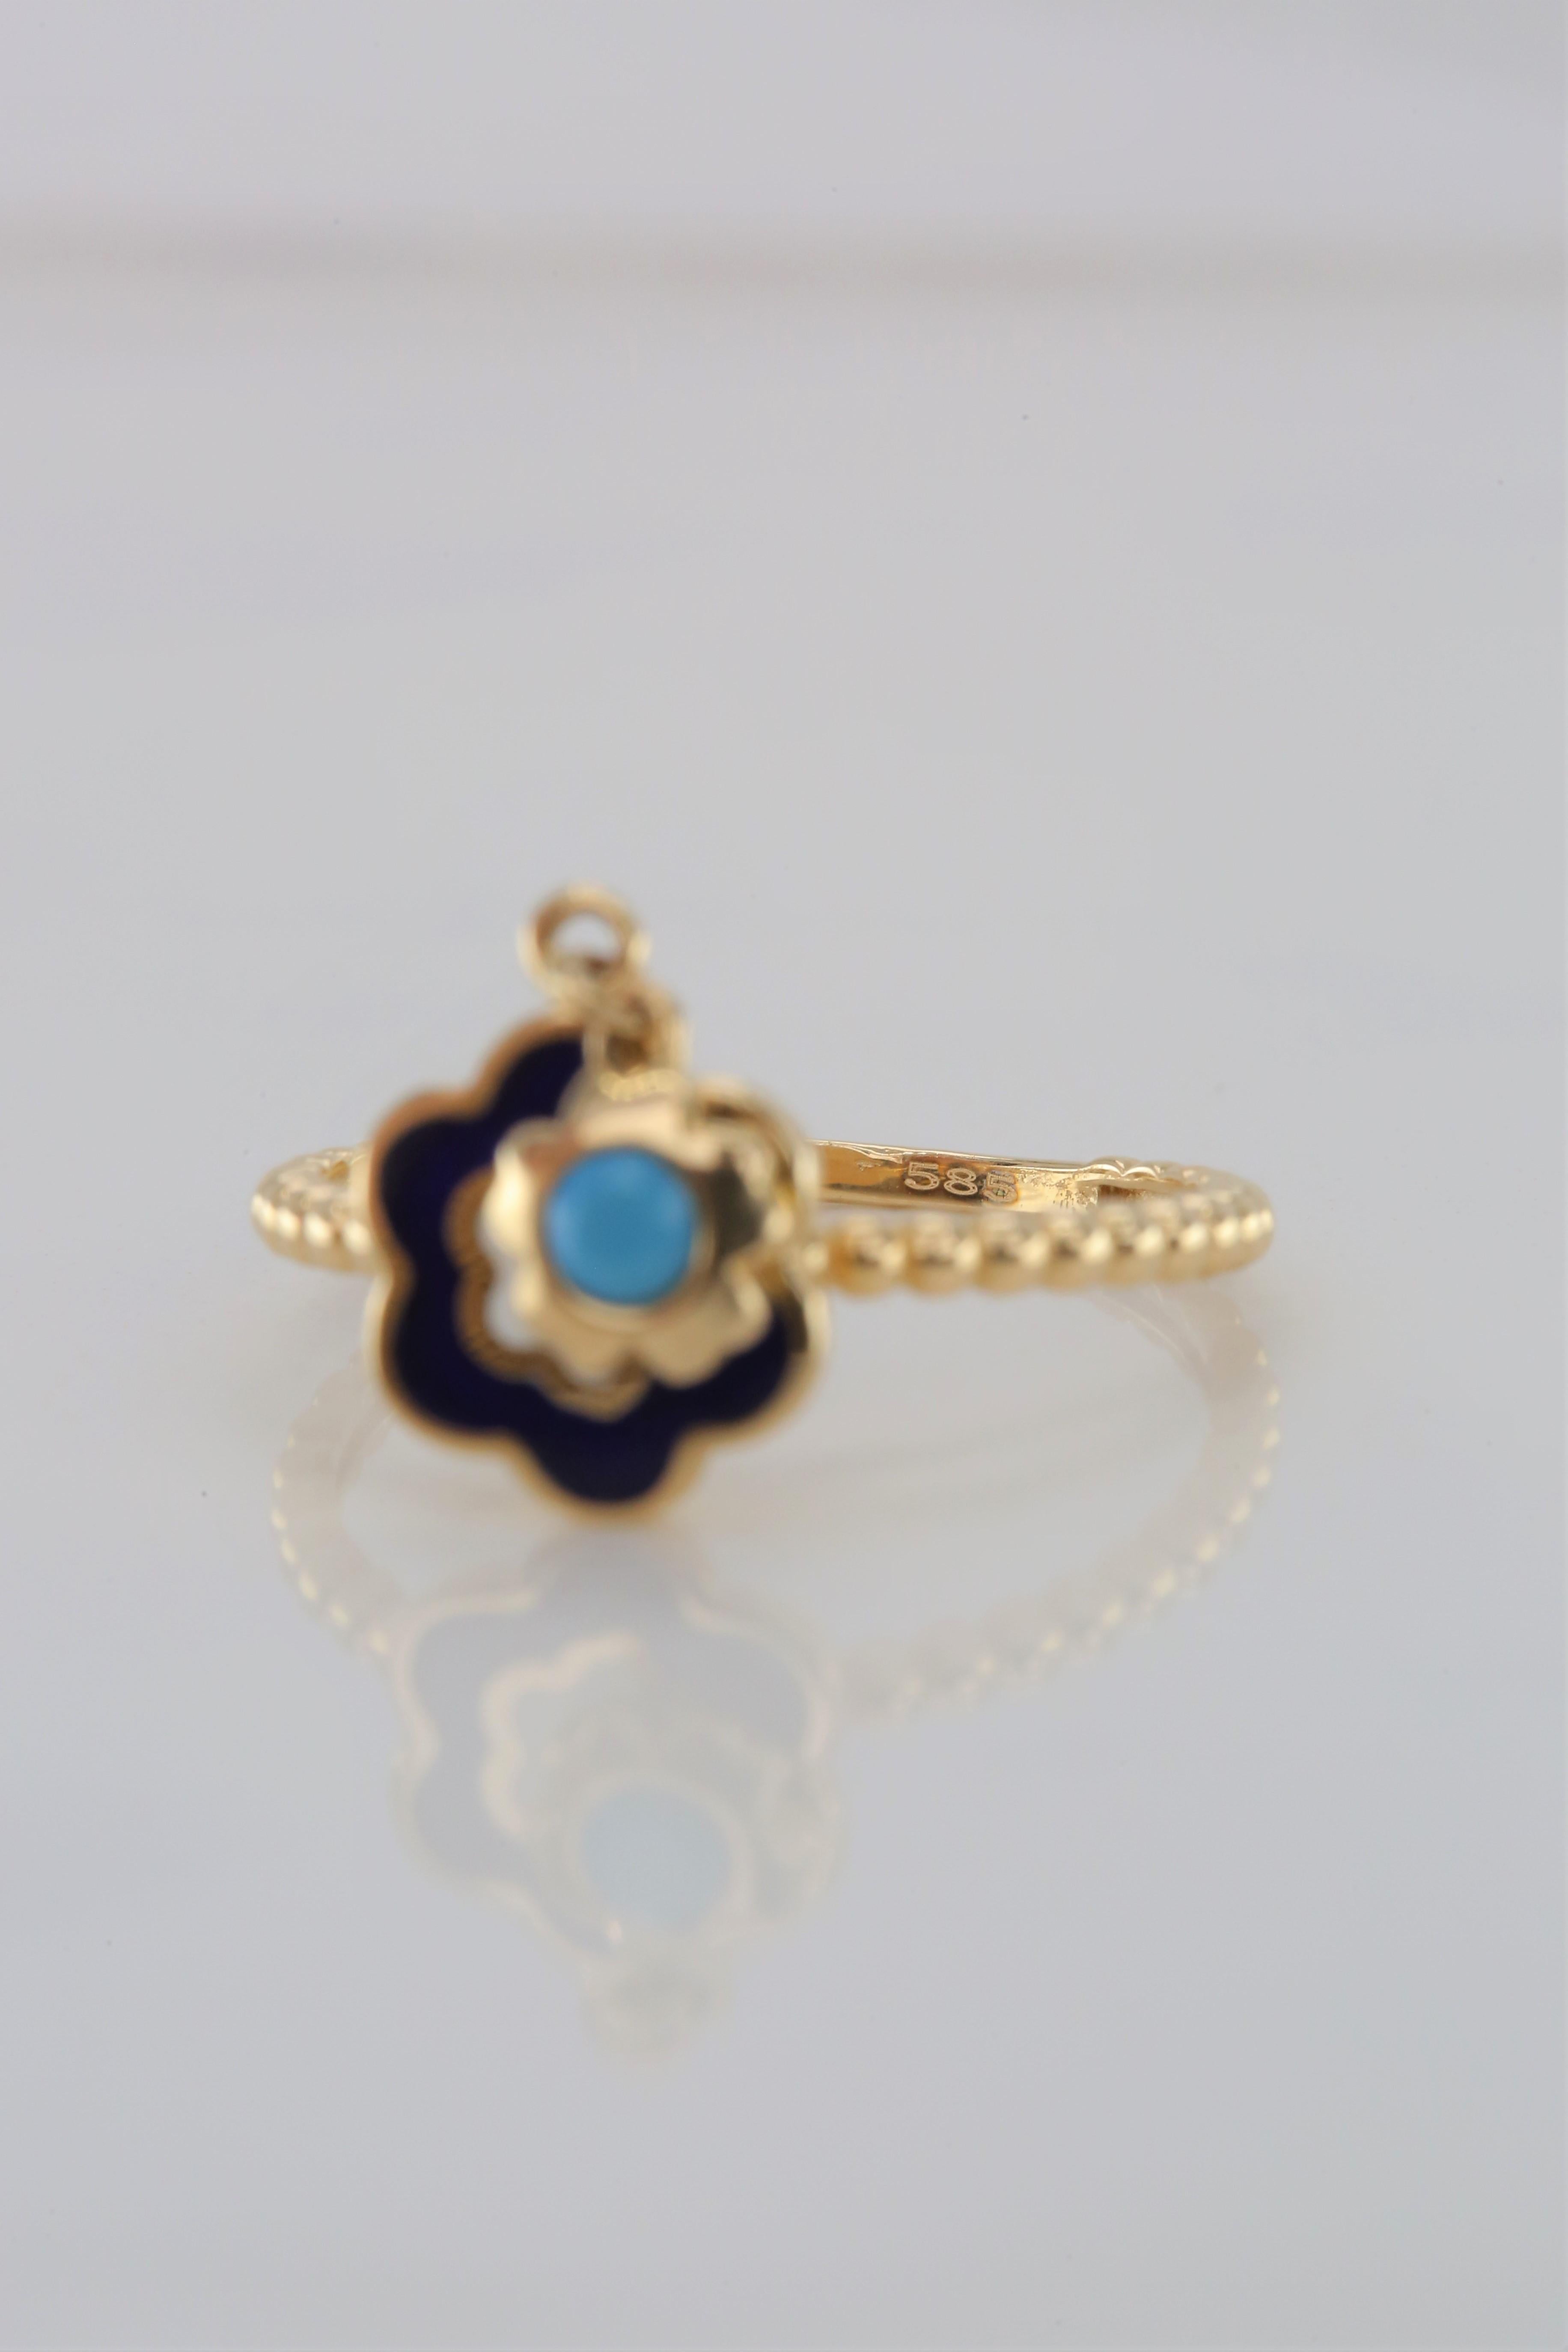 14K Gold Daisy Enamel Ring with Turquoise Pendant 7